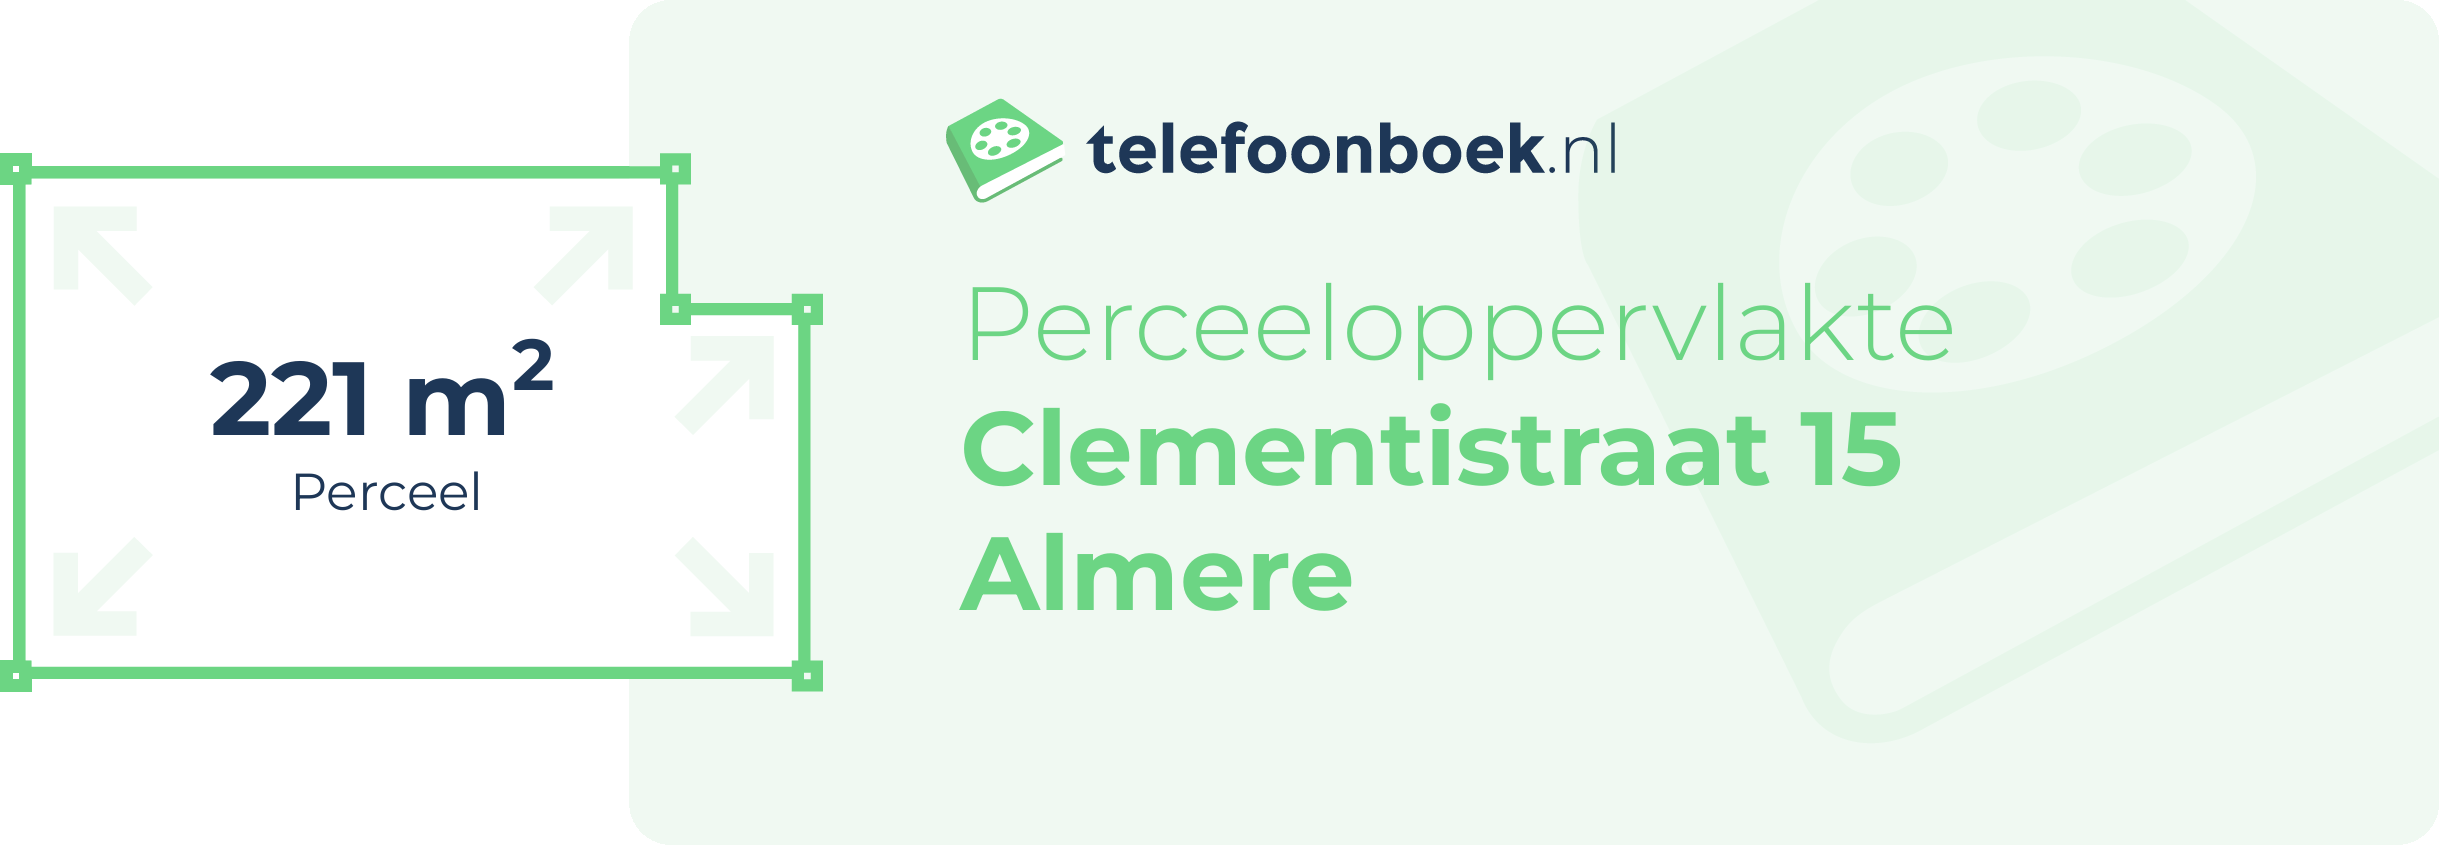 Perceeloppervlakte Clementistraat 15 Almere